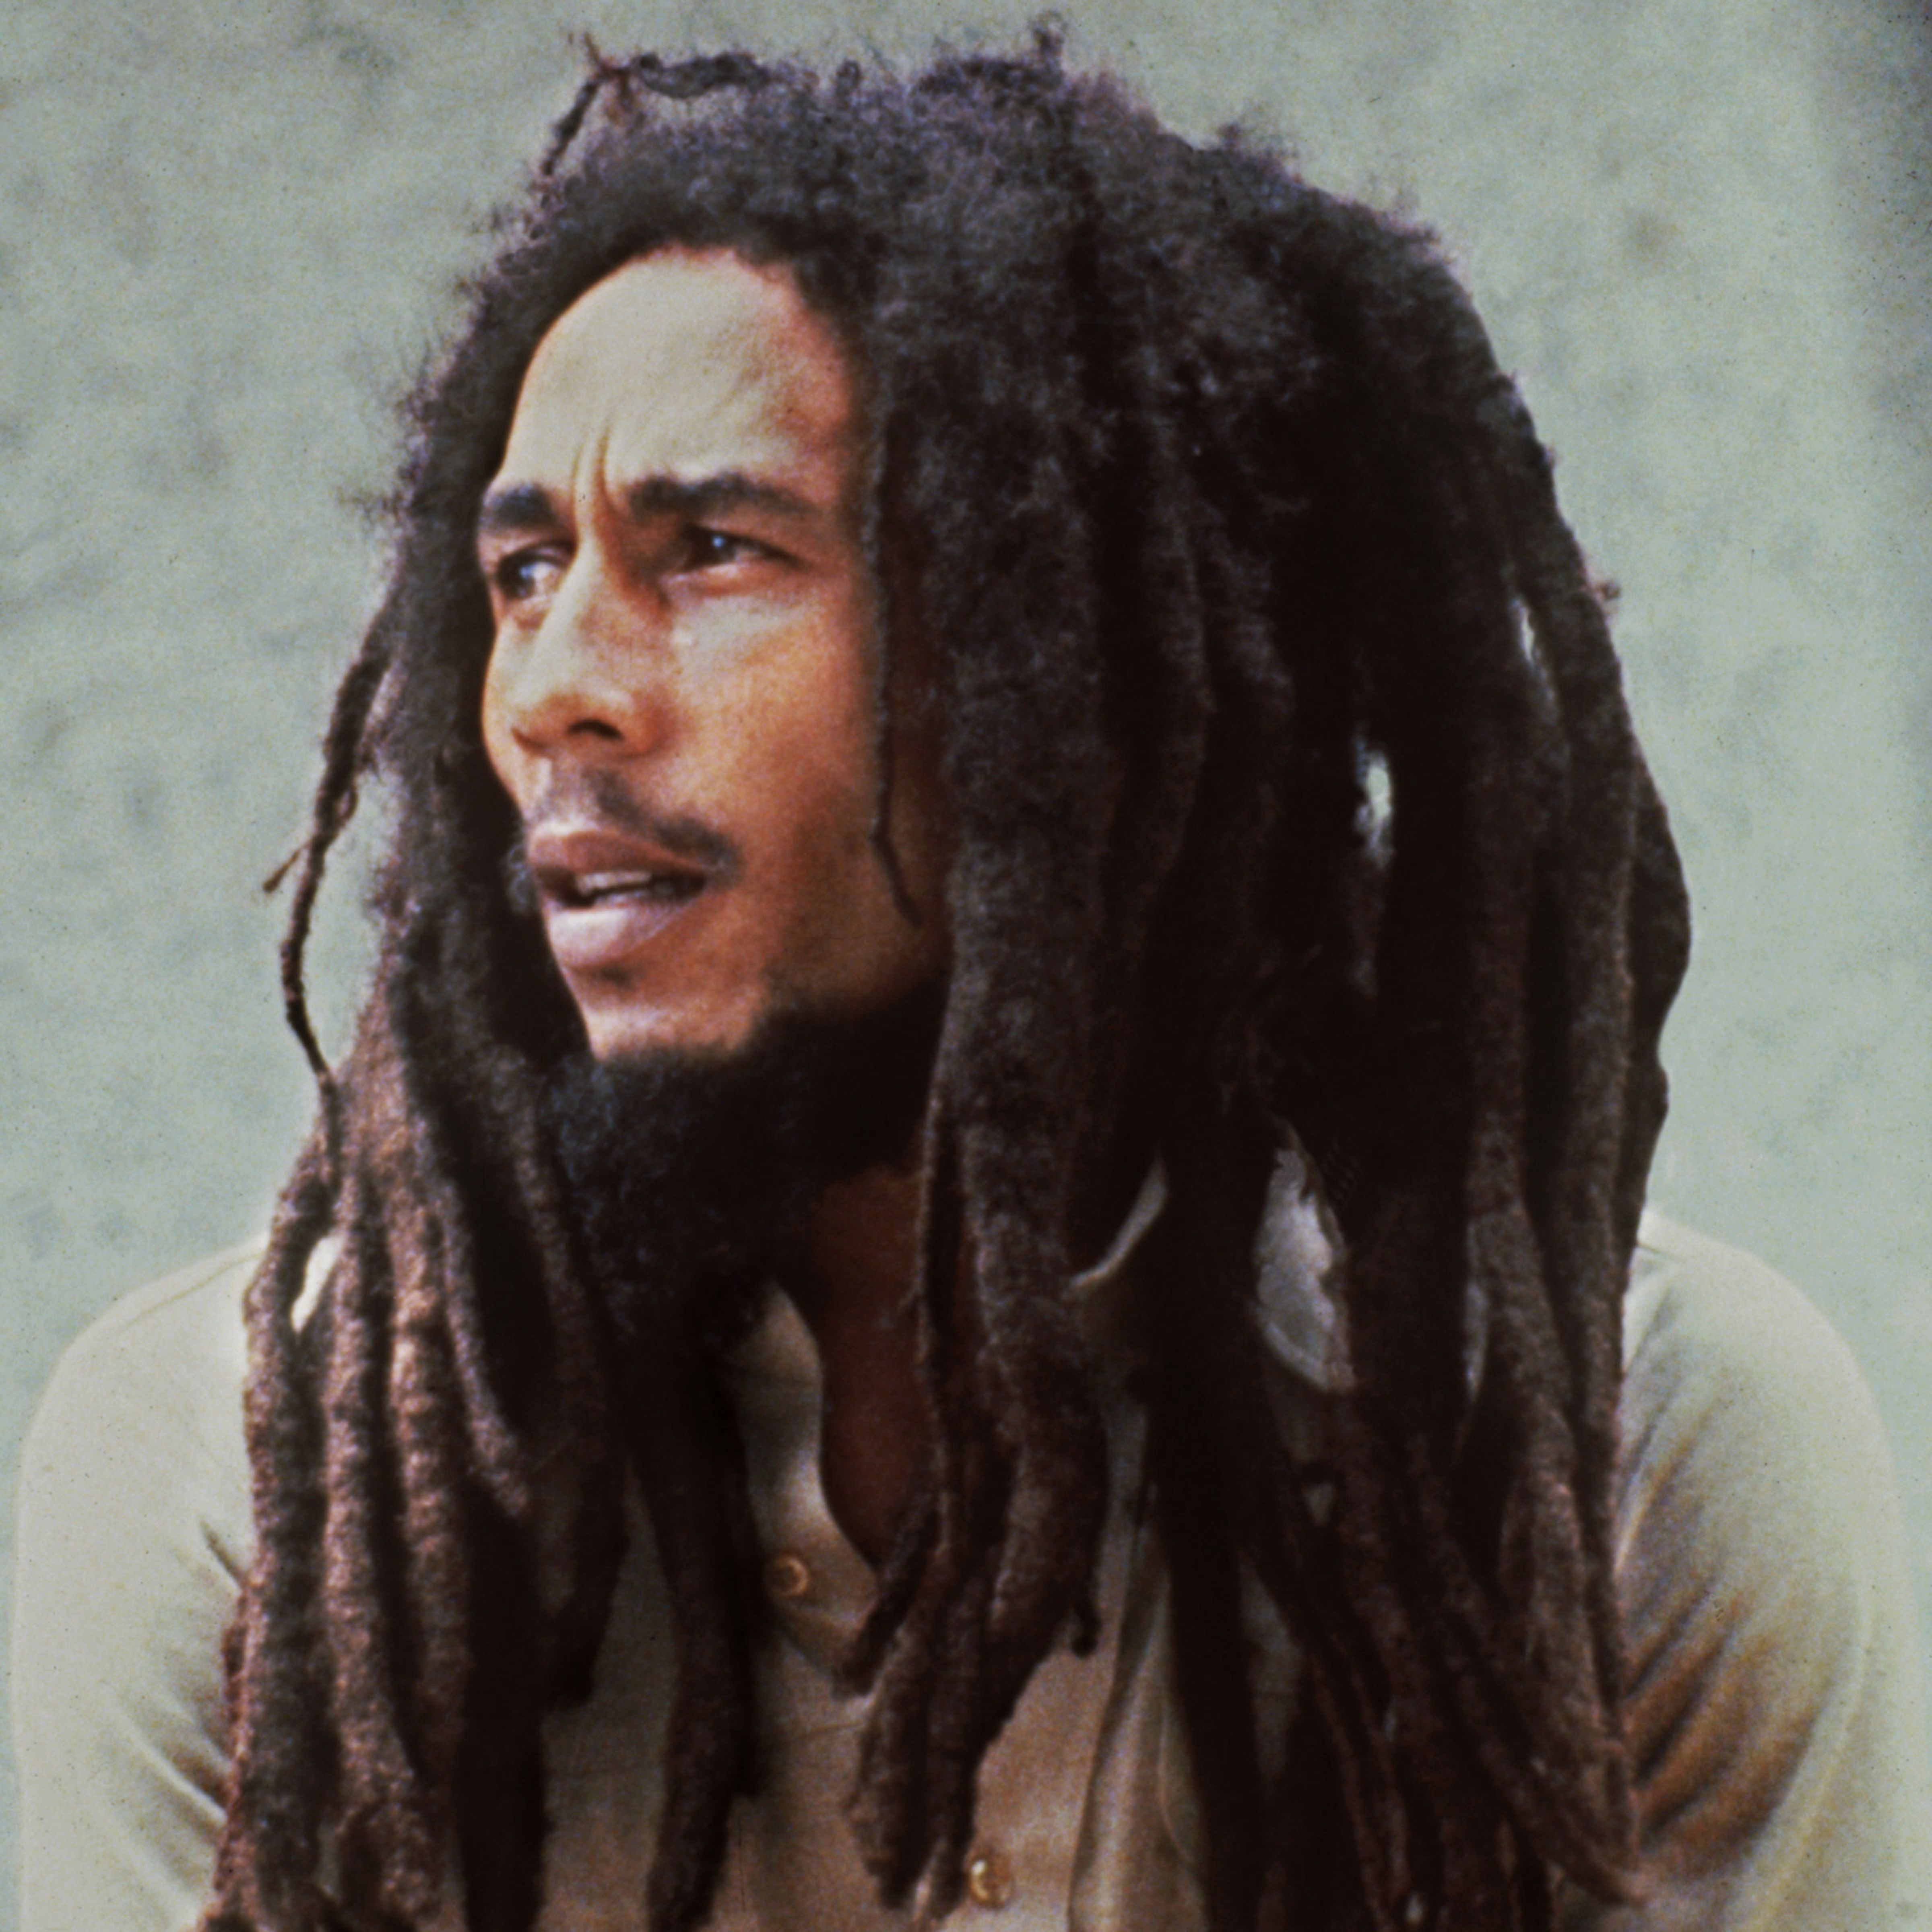 Bob Marley Music and Bio - Reggae